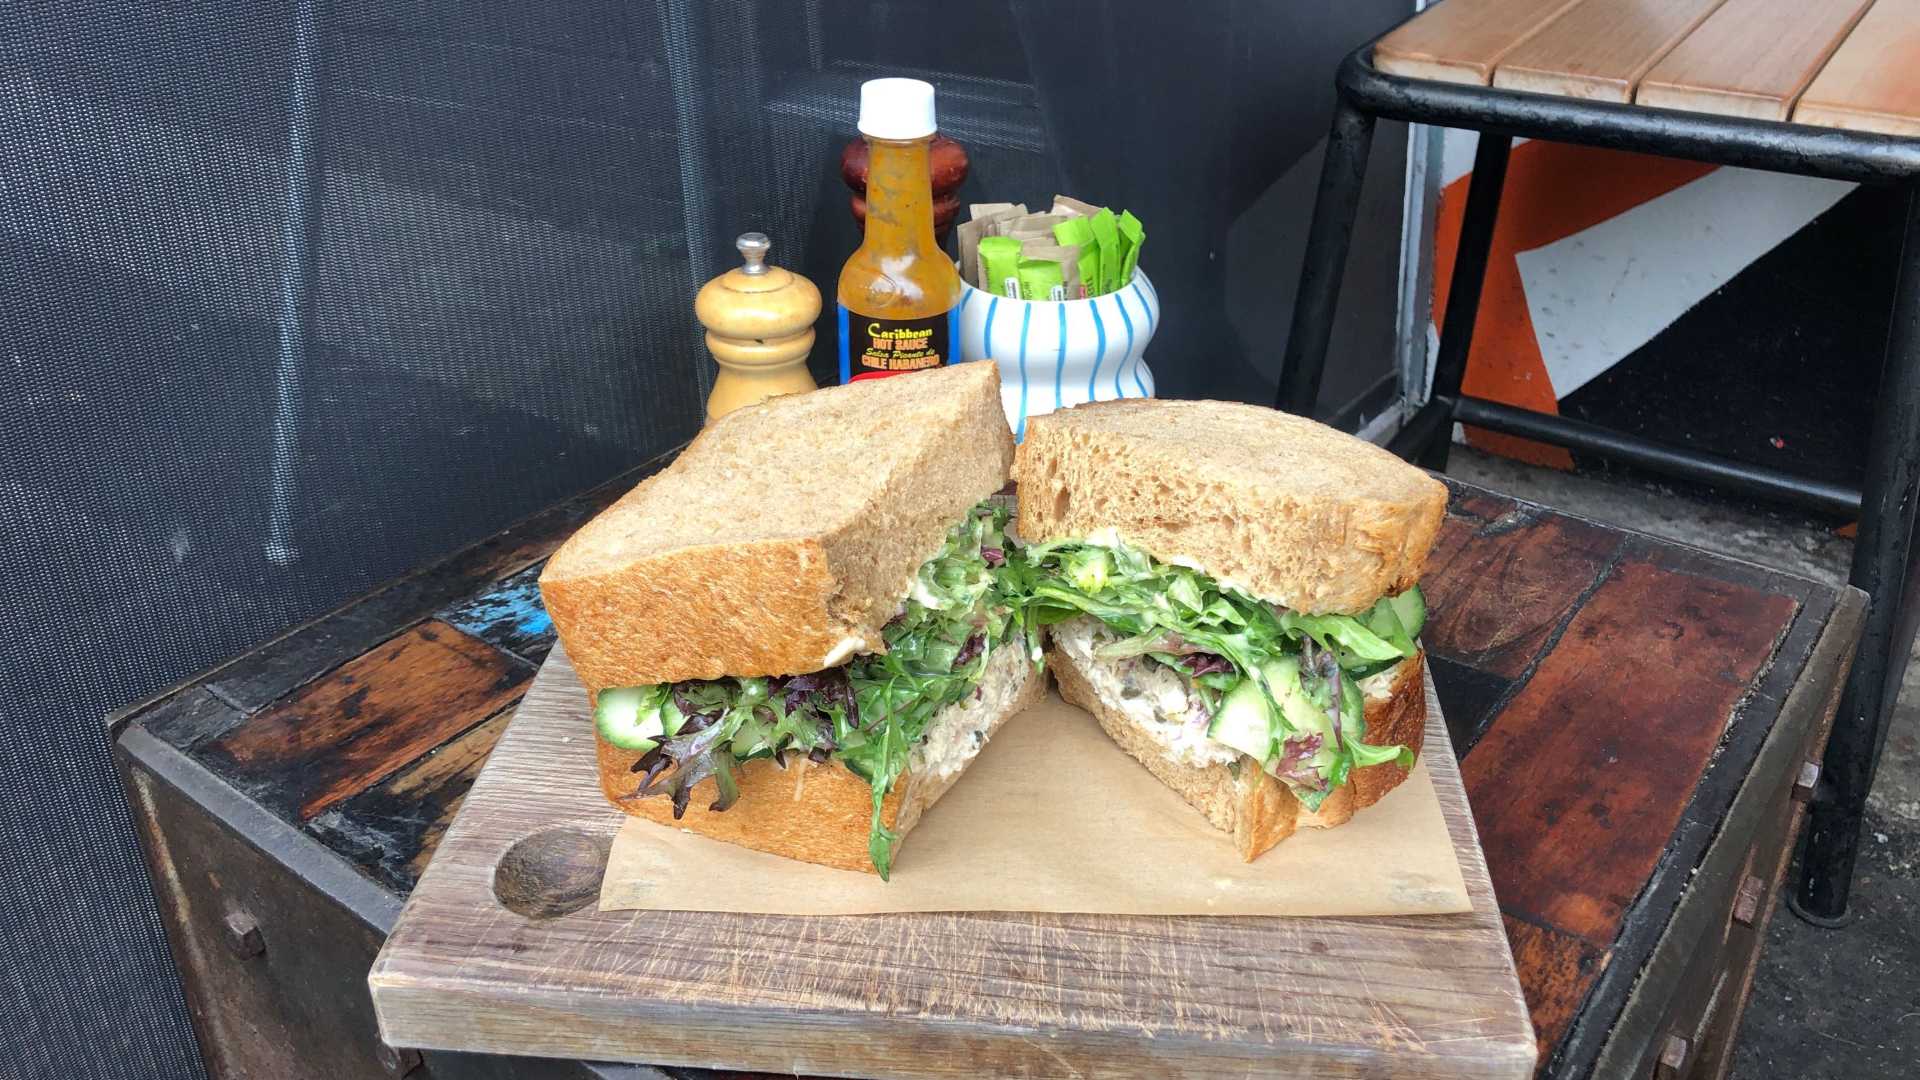 Tuna sandwich from The Shop